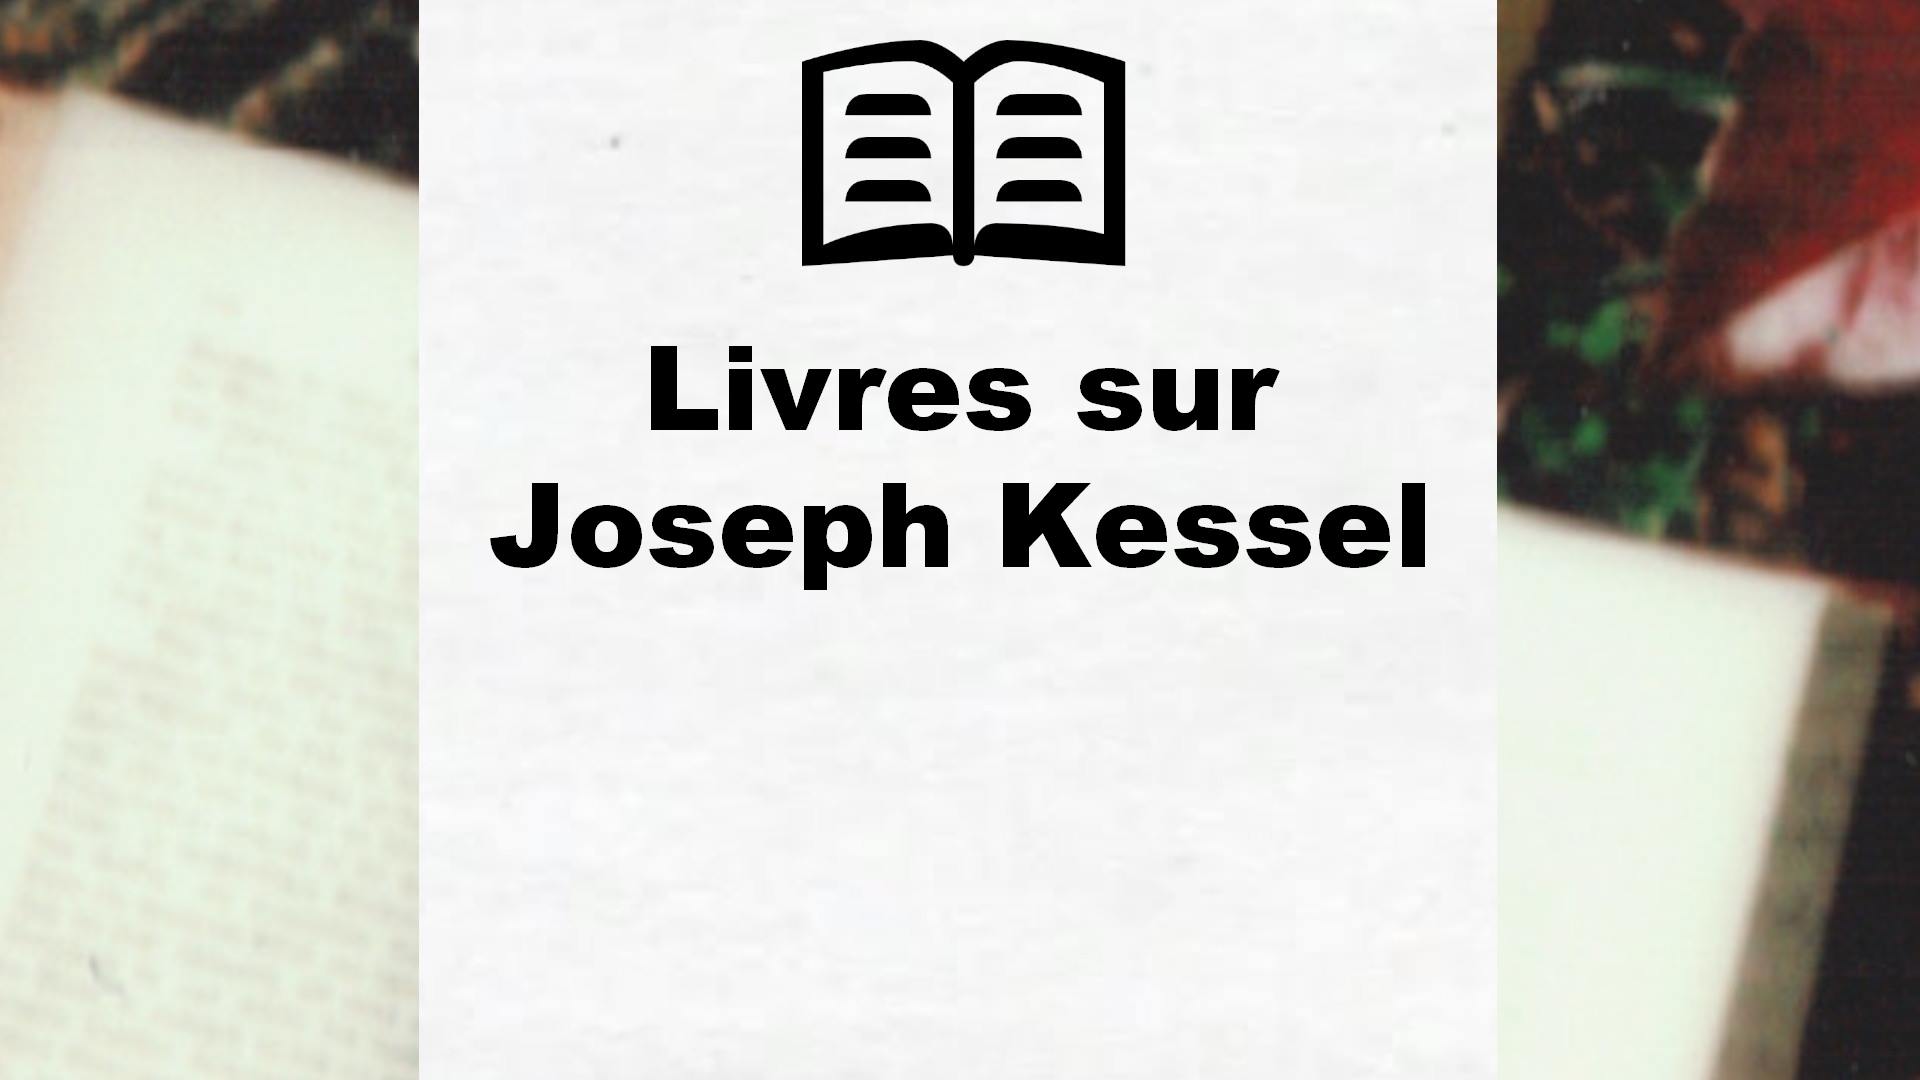 Livres sur Joseph Kessel